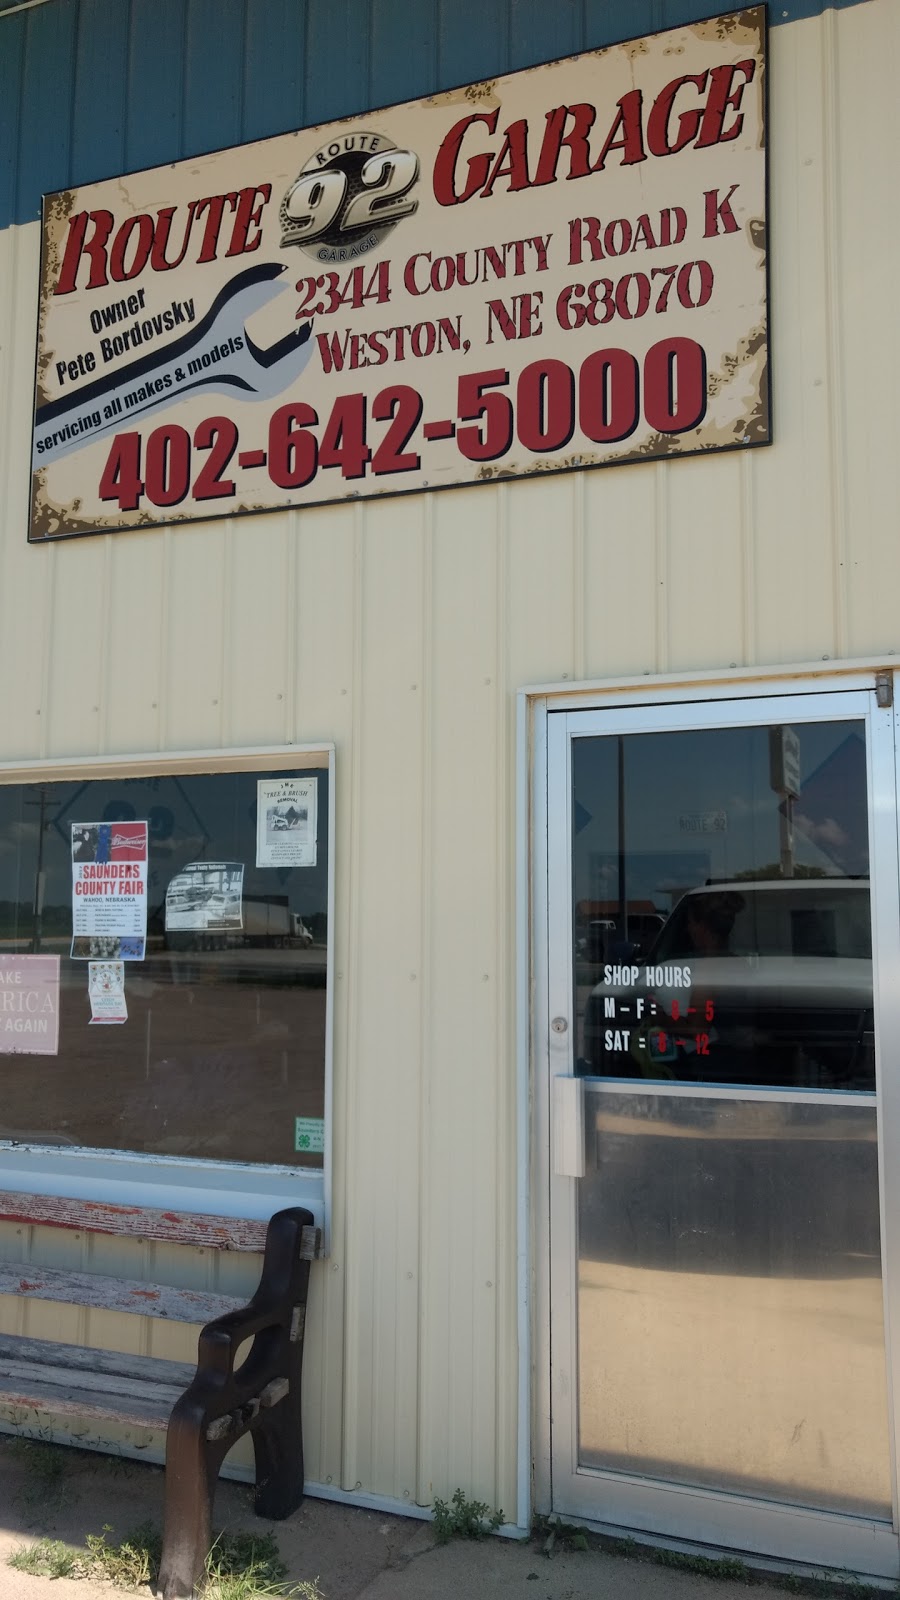 Route 92 Garage LLC | 2344 Co Rd K, Weston, NE 68070, USA | Phone: (402) 642-5000